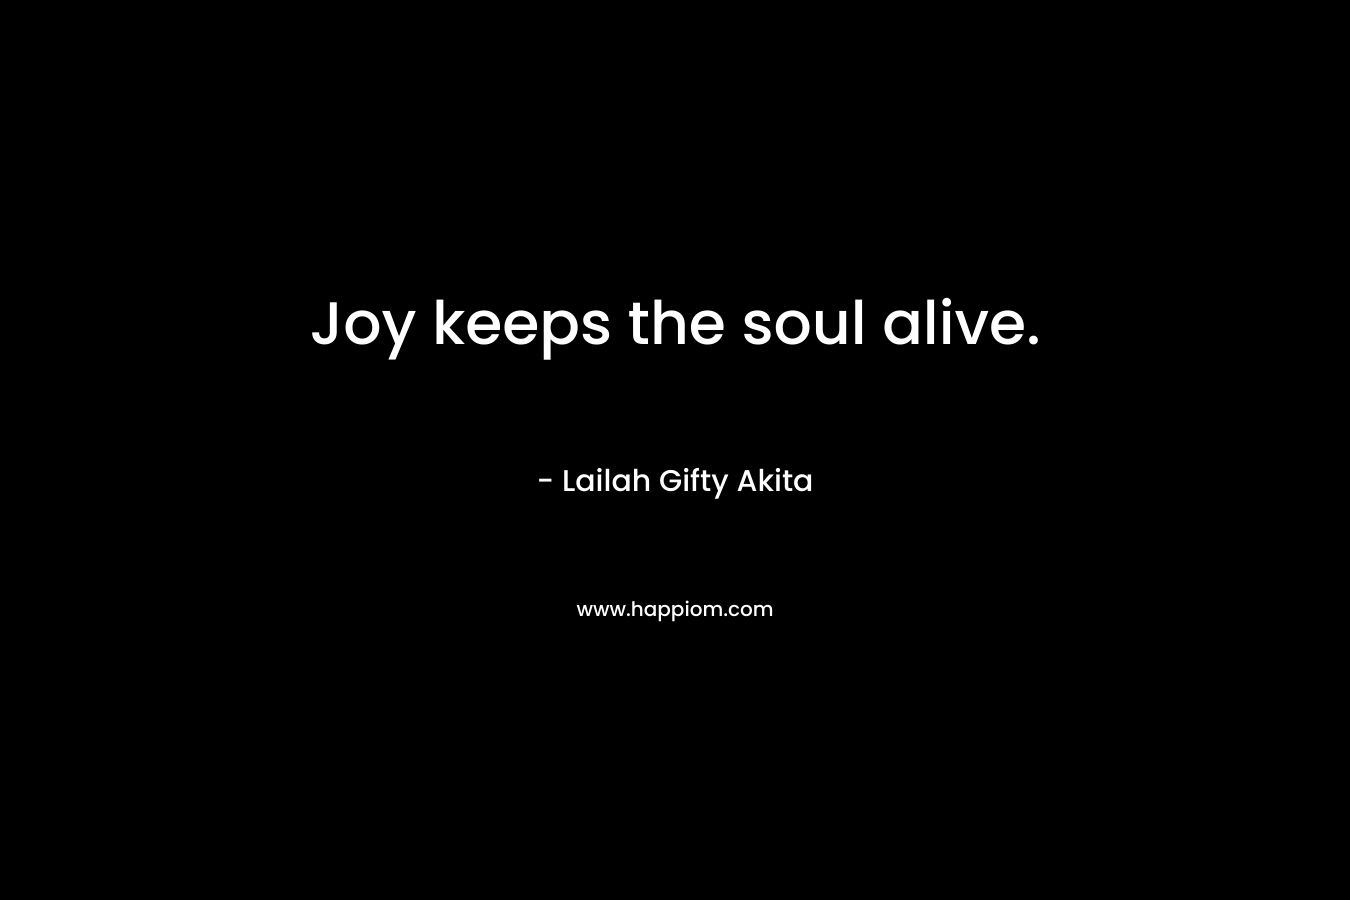 Joy keeps the soul alive.